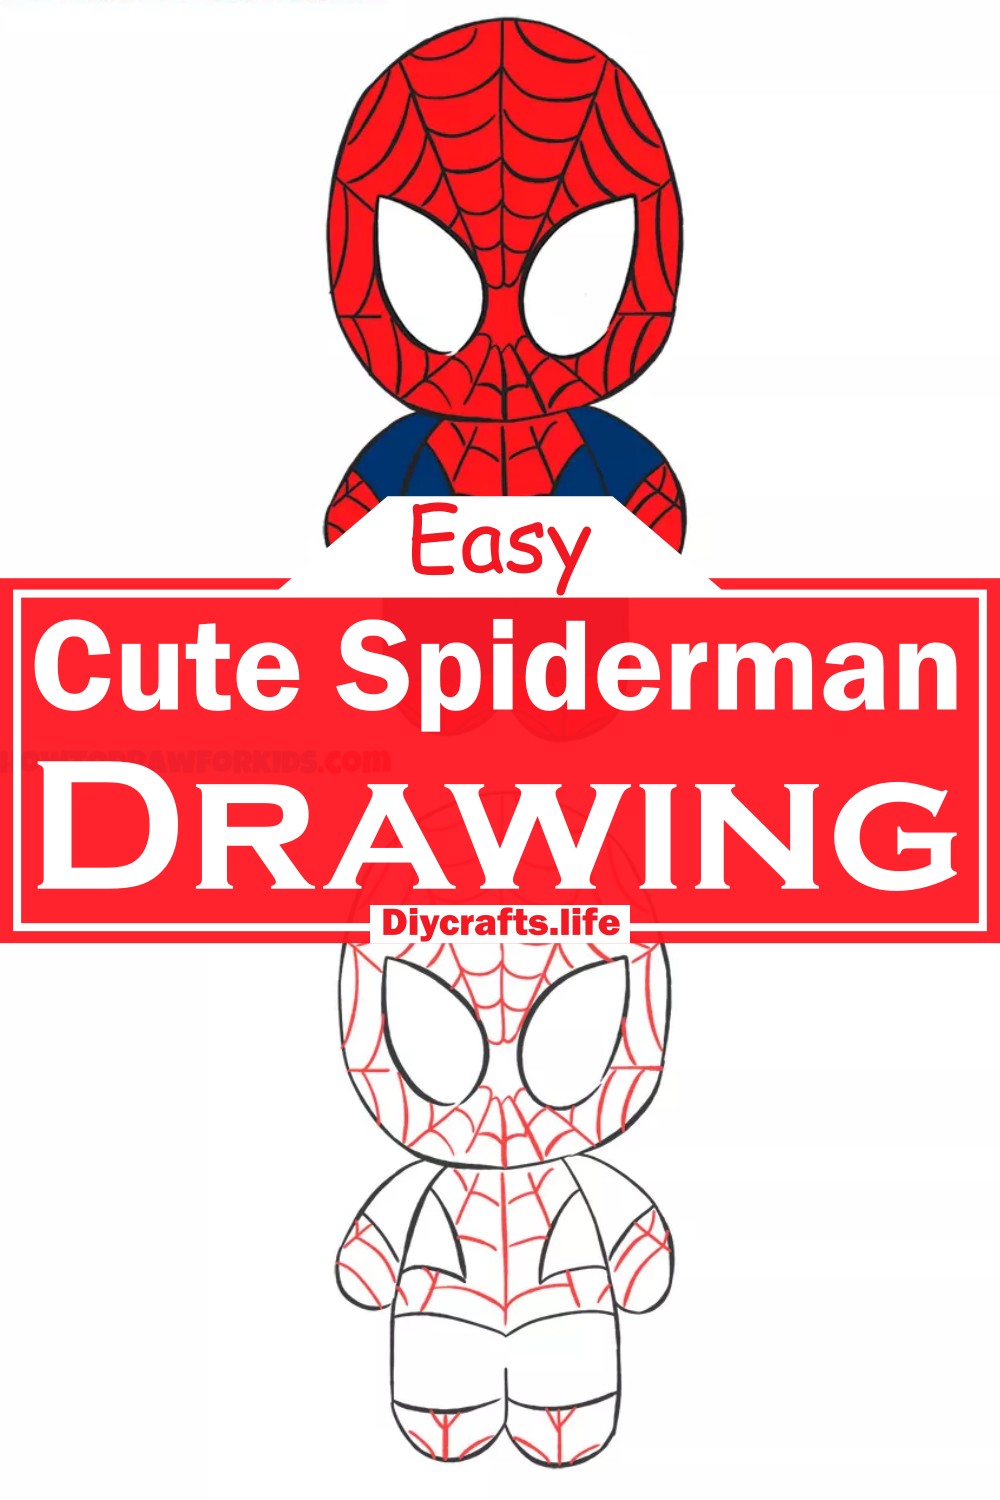 Spider Man Drawing by Zeeshan Tariq | Saatchi Art-saigonsouth.com.vn